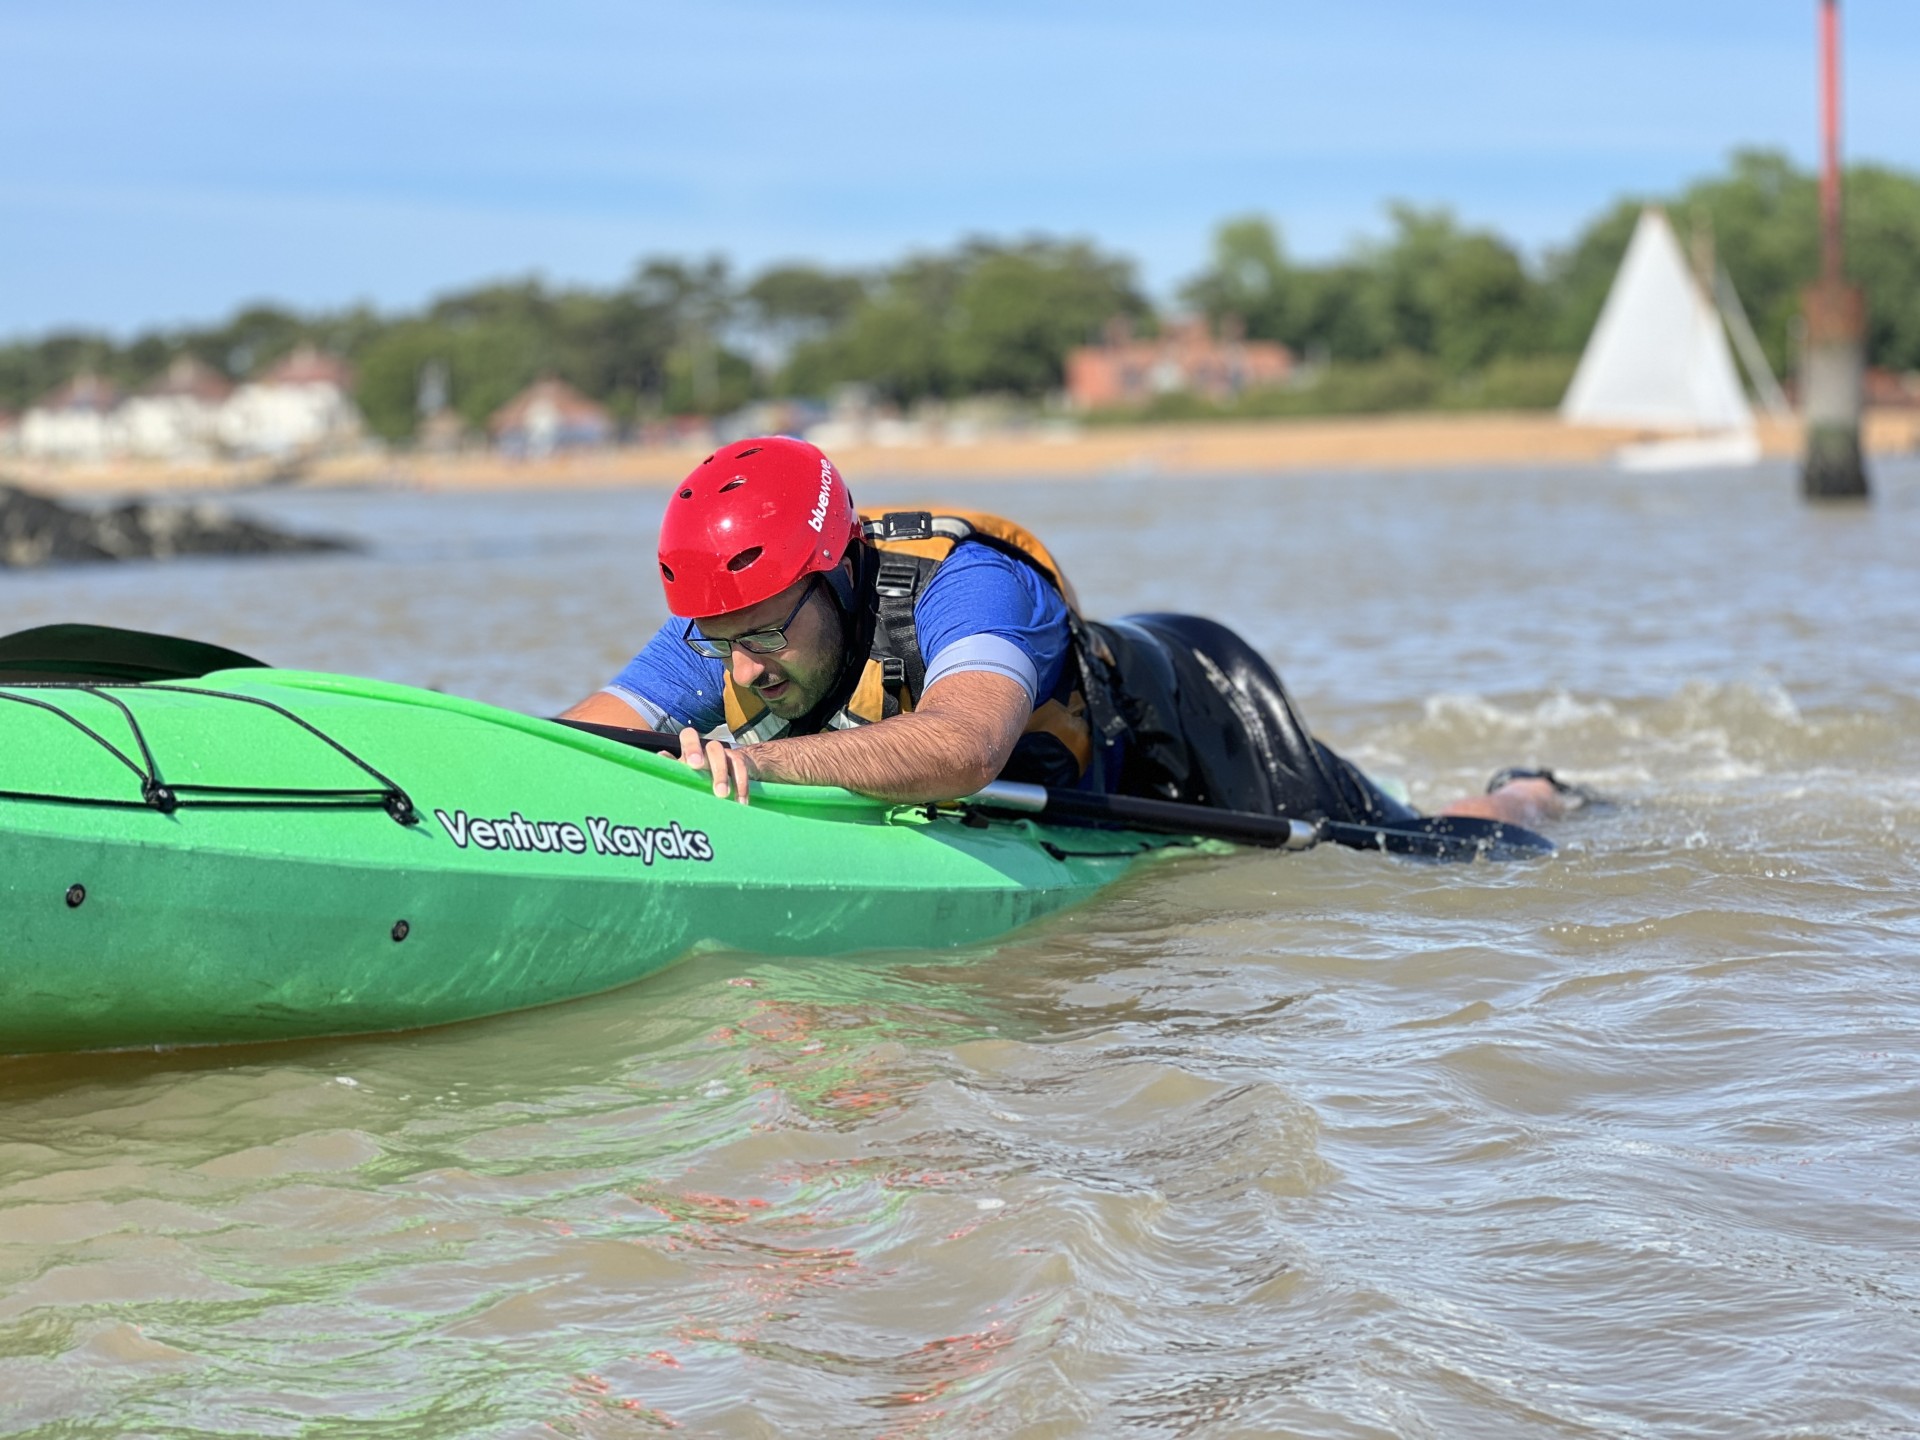 Back deck scramble sea kayak rescues training with NOMAD Sea Kayaking.